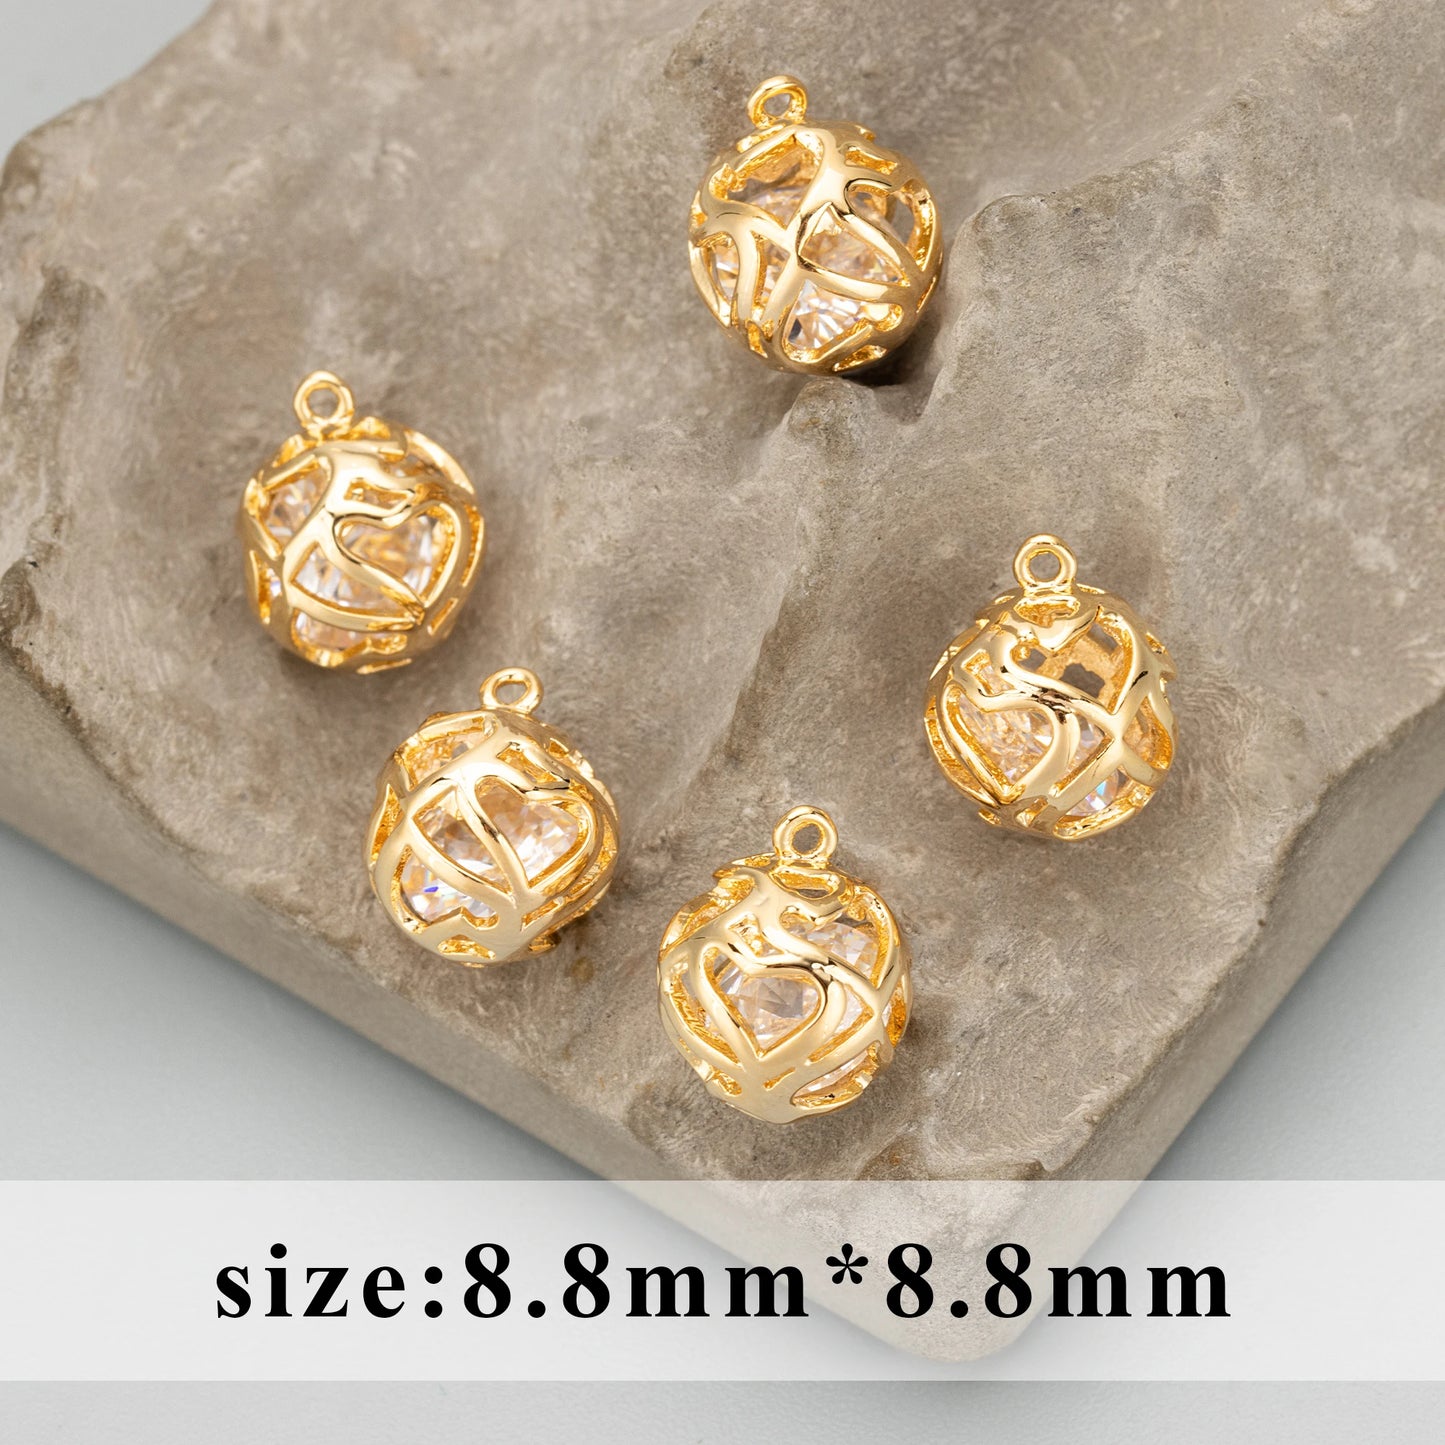 GUFEATHER M829,jewelry accessories,pass REACH,nickel free,18k gold plated,zircon pendants,jewelry making,diy earrings,10pcs/lot